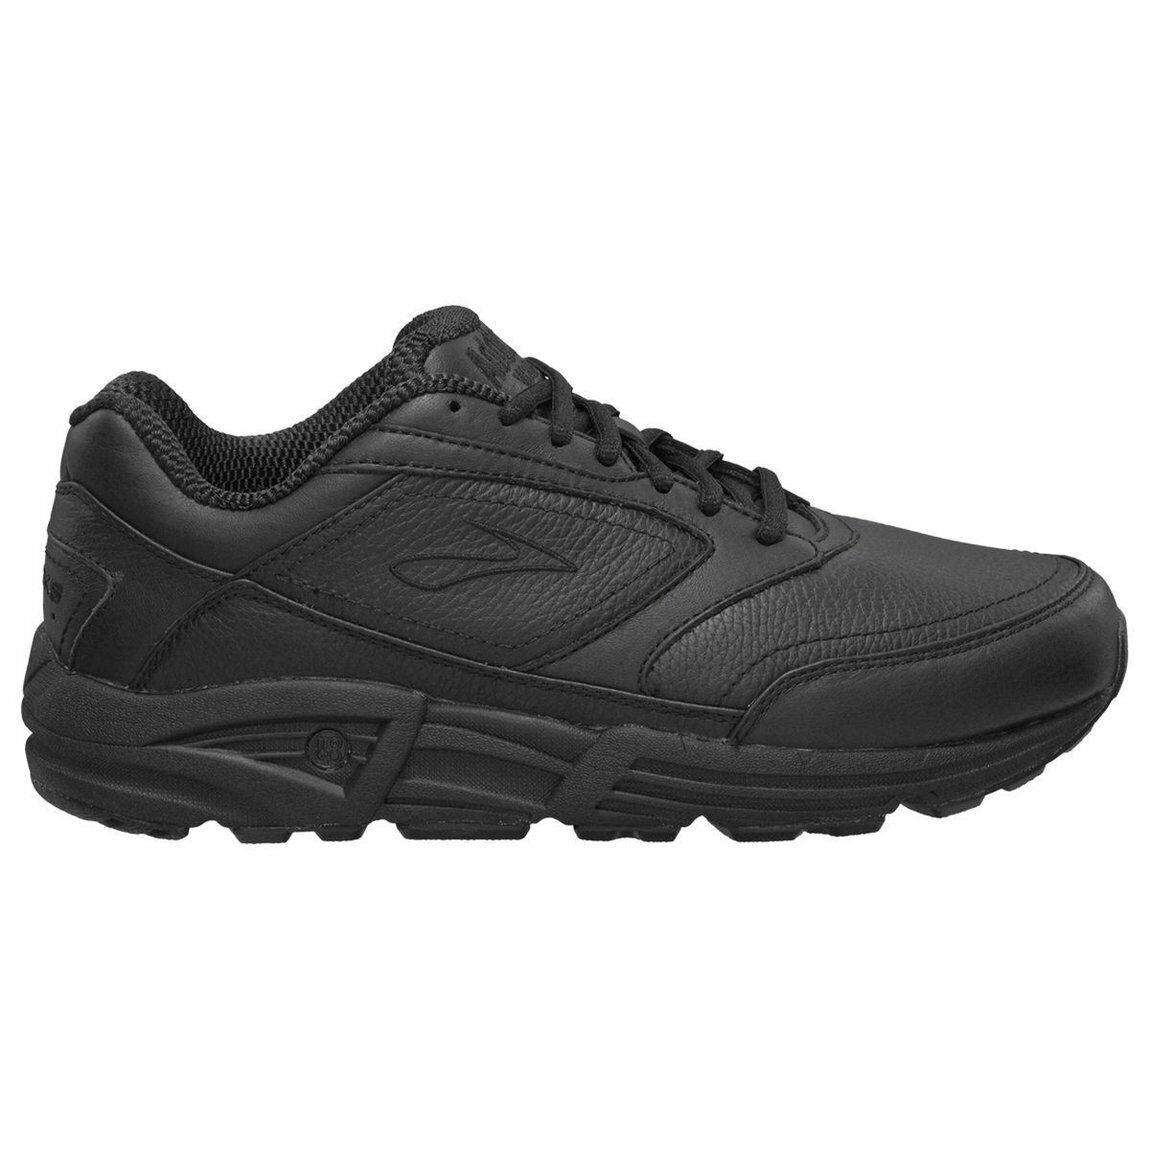 Brooks Addiction Walker 1100394E001 Walking Shoes Black Men`s Size 13 4E - Black